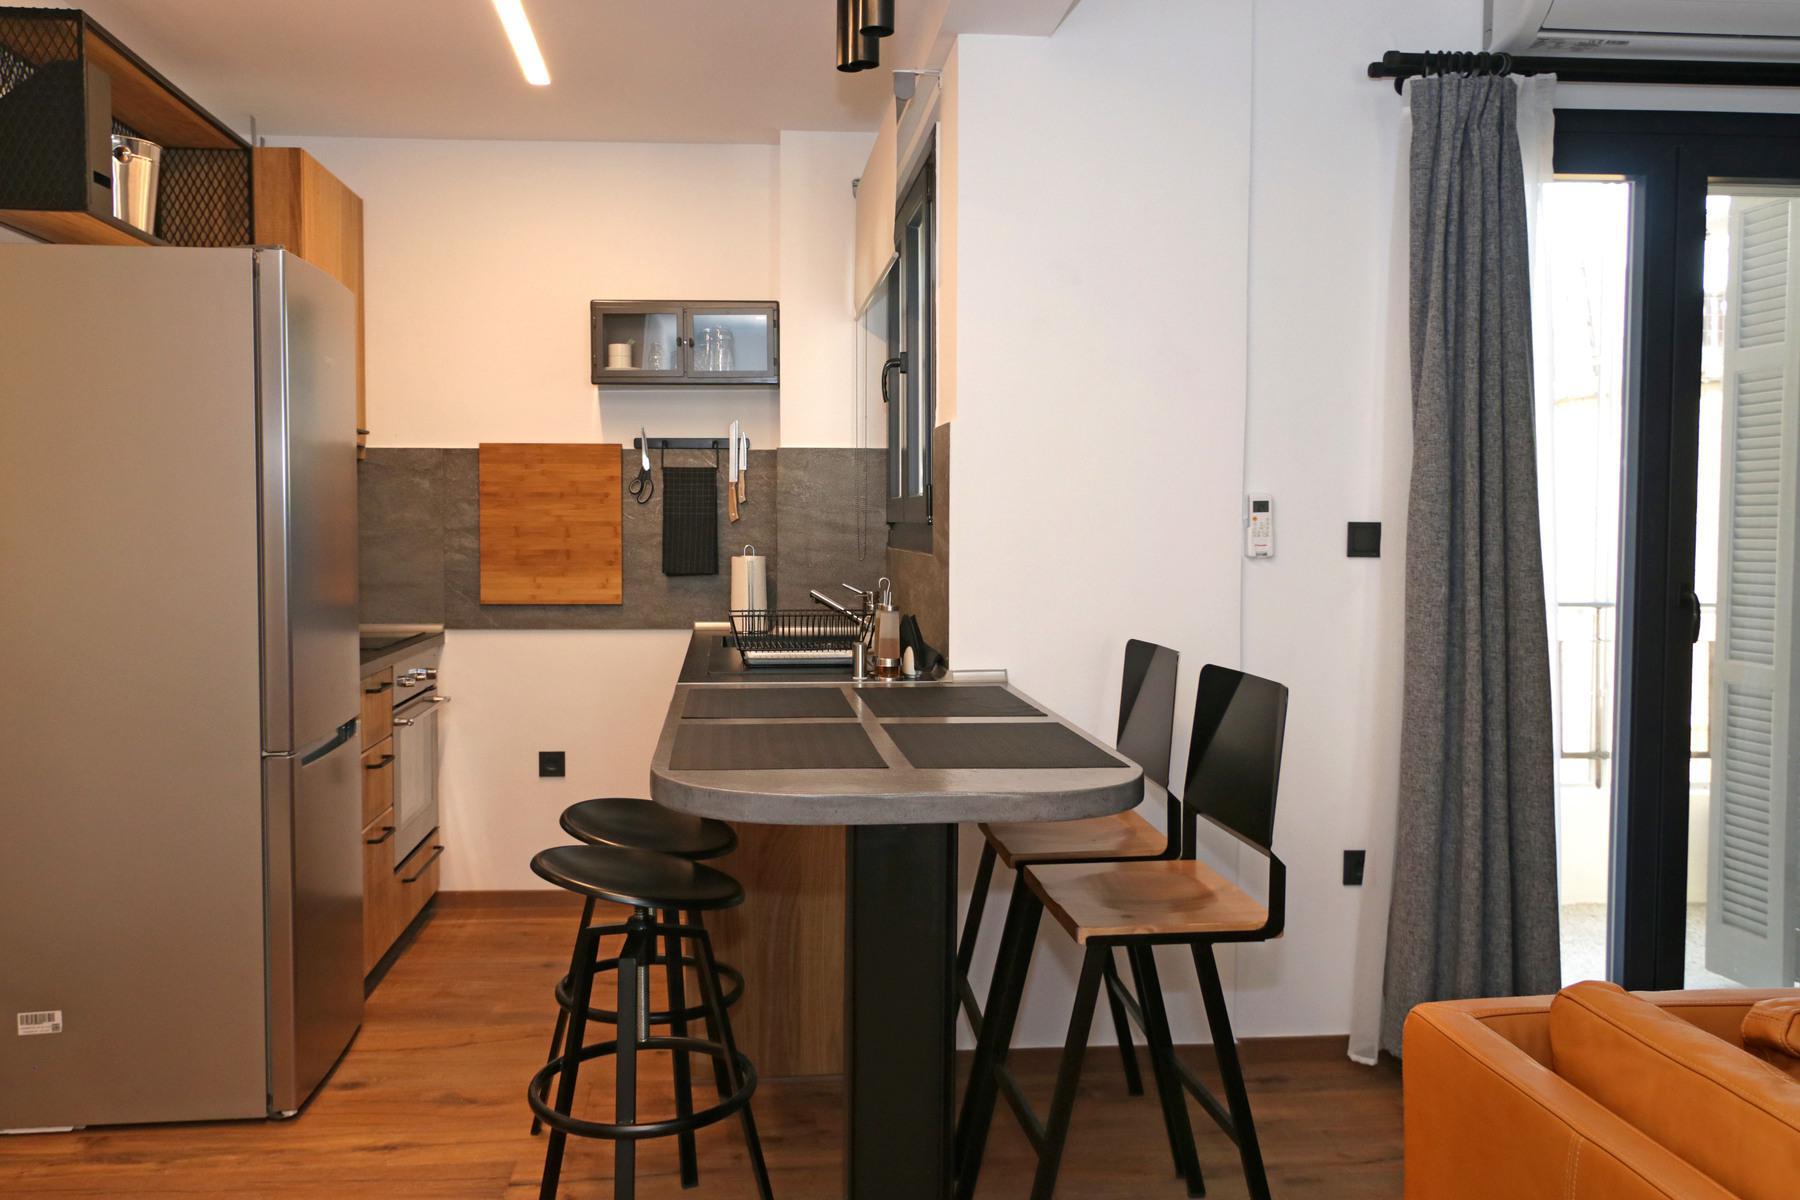 Bachelor Pad - Short Term Rental Apartment Renovation